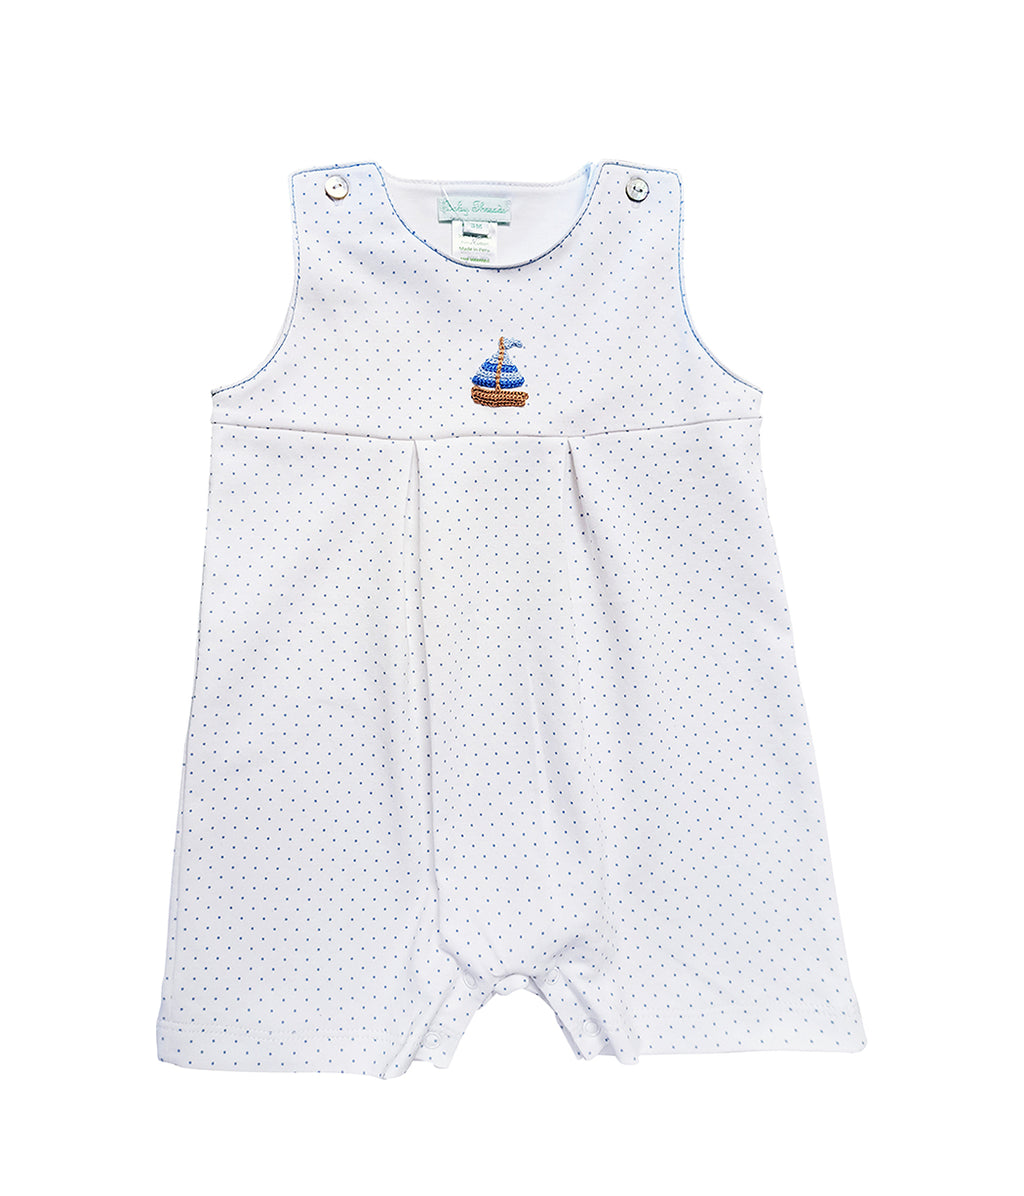 Sailboat Print Baby Boy Pima Cotton Smocked Romper - Little Threads Inc. Children's Clothing